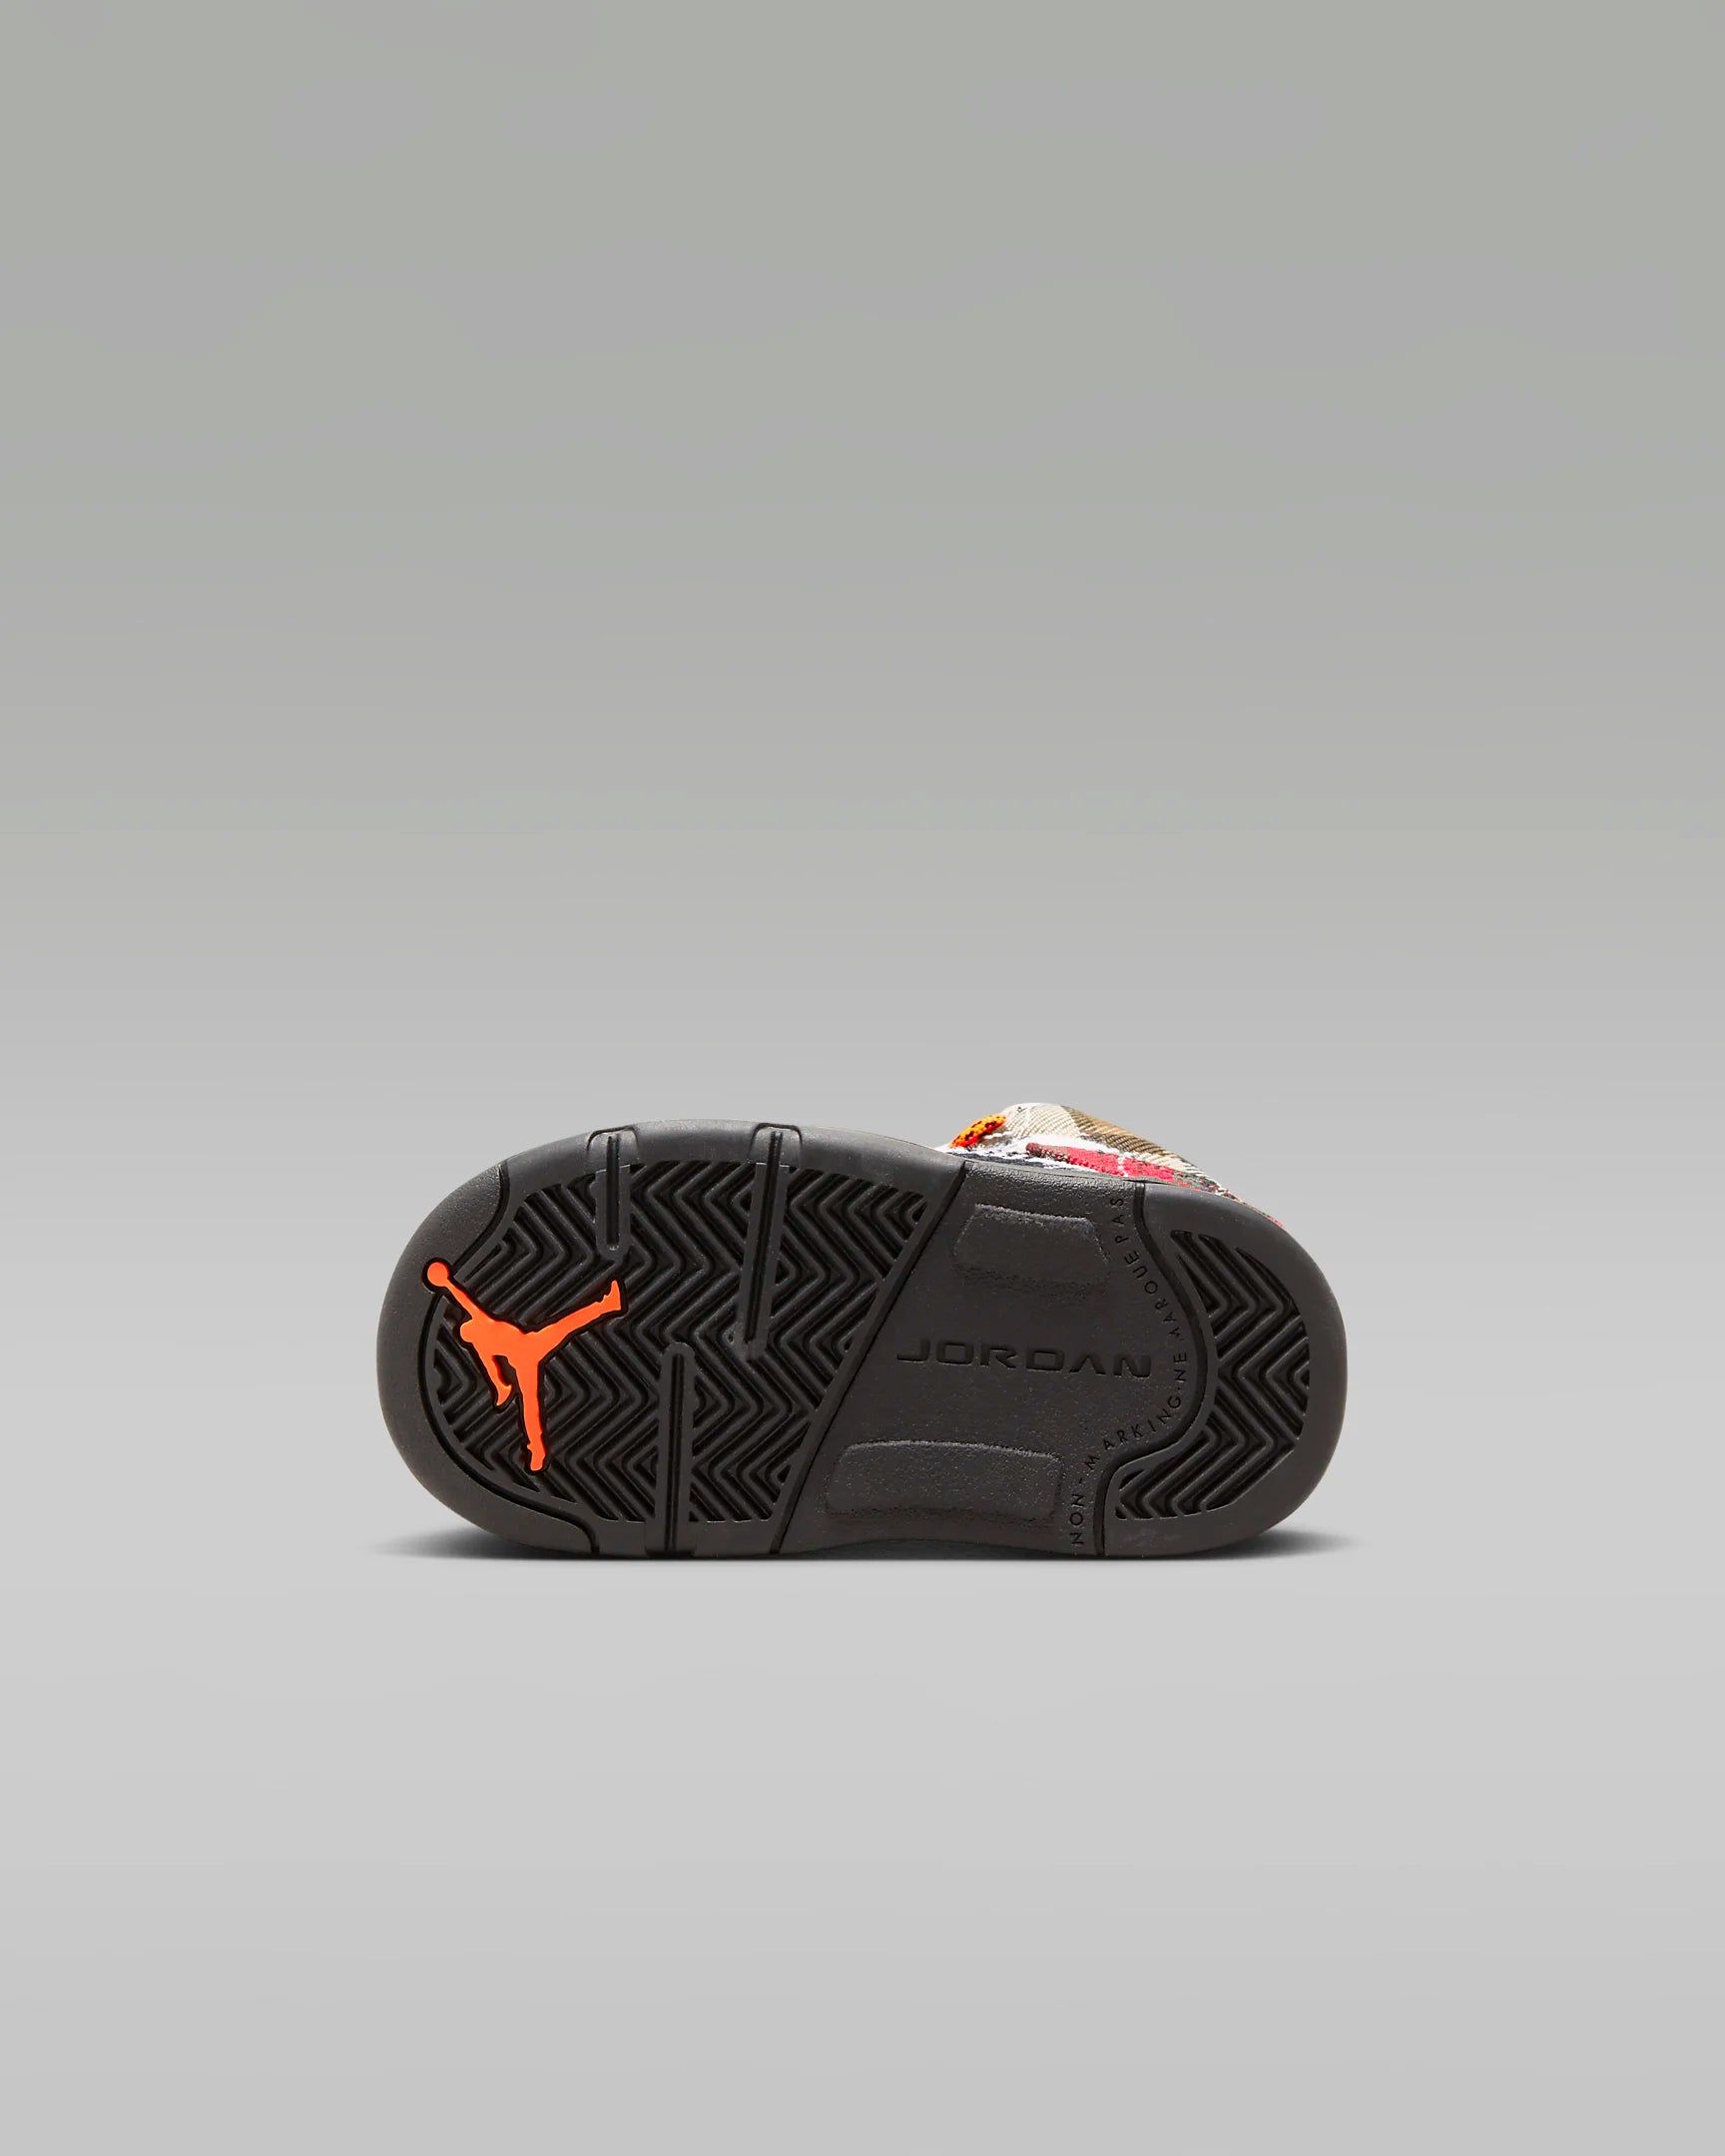 Tenis Nike Baby Jordan 5 Retro Plaid